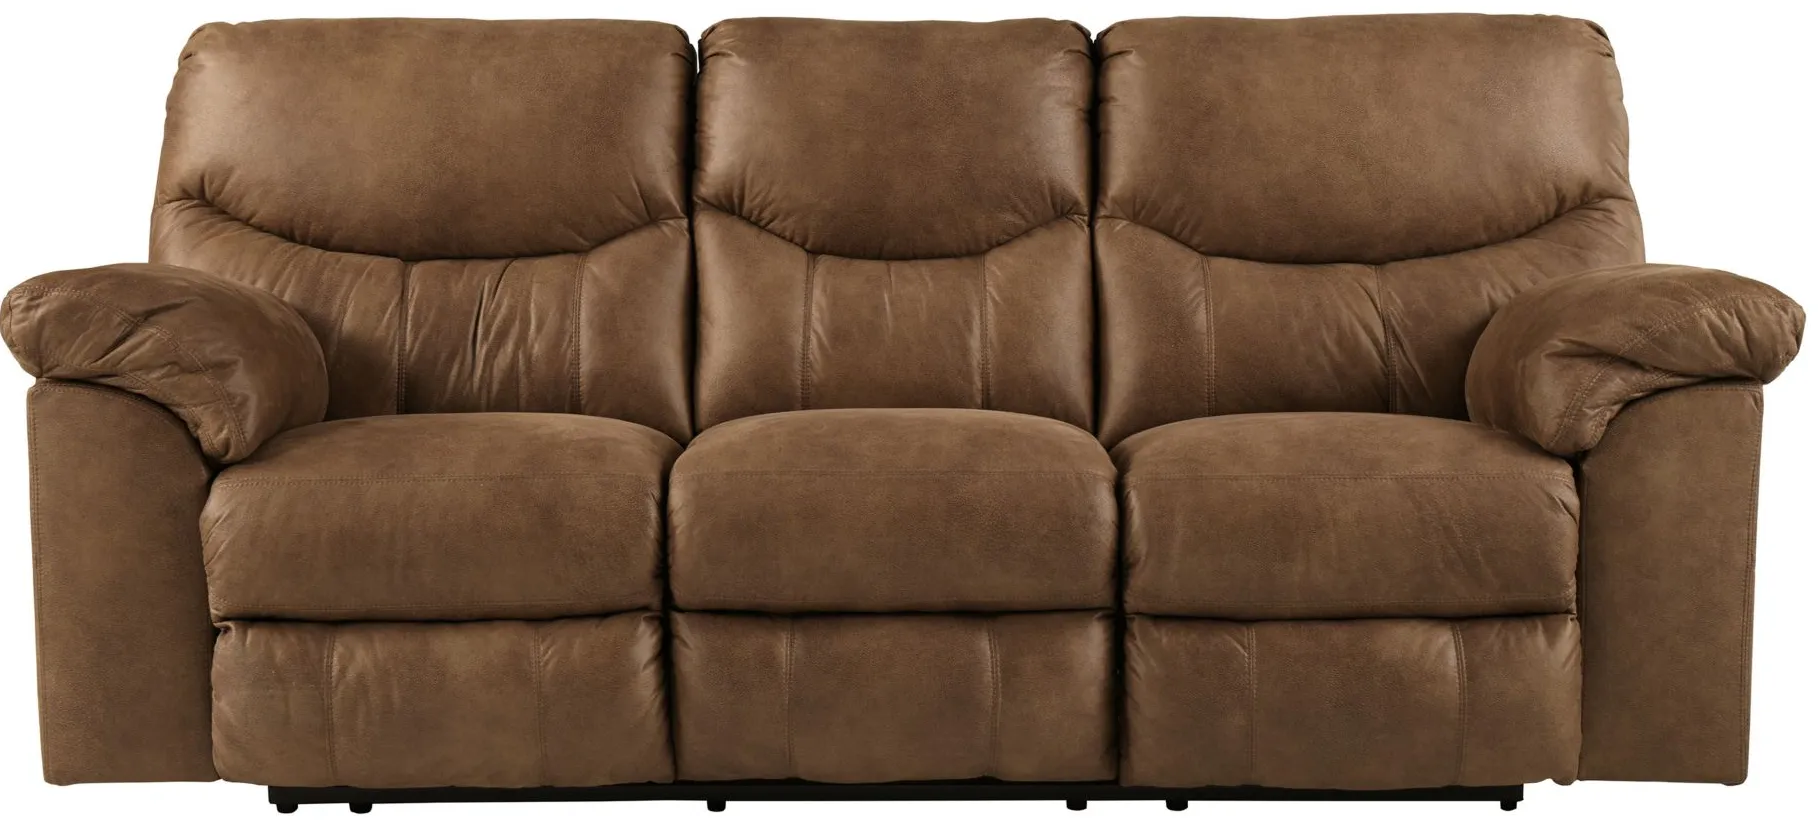 Boxberg Reclining Sofa in Bark by Ashley Furniture